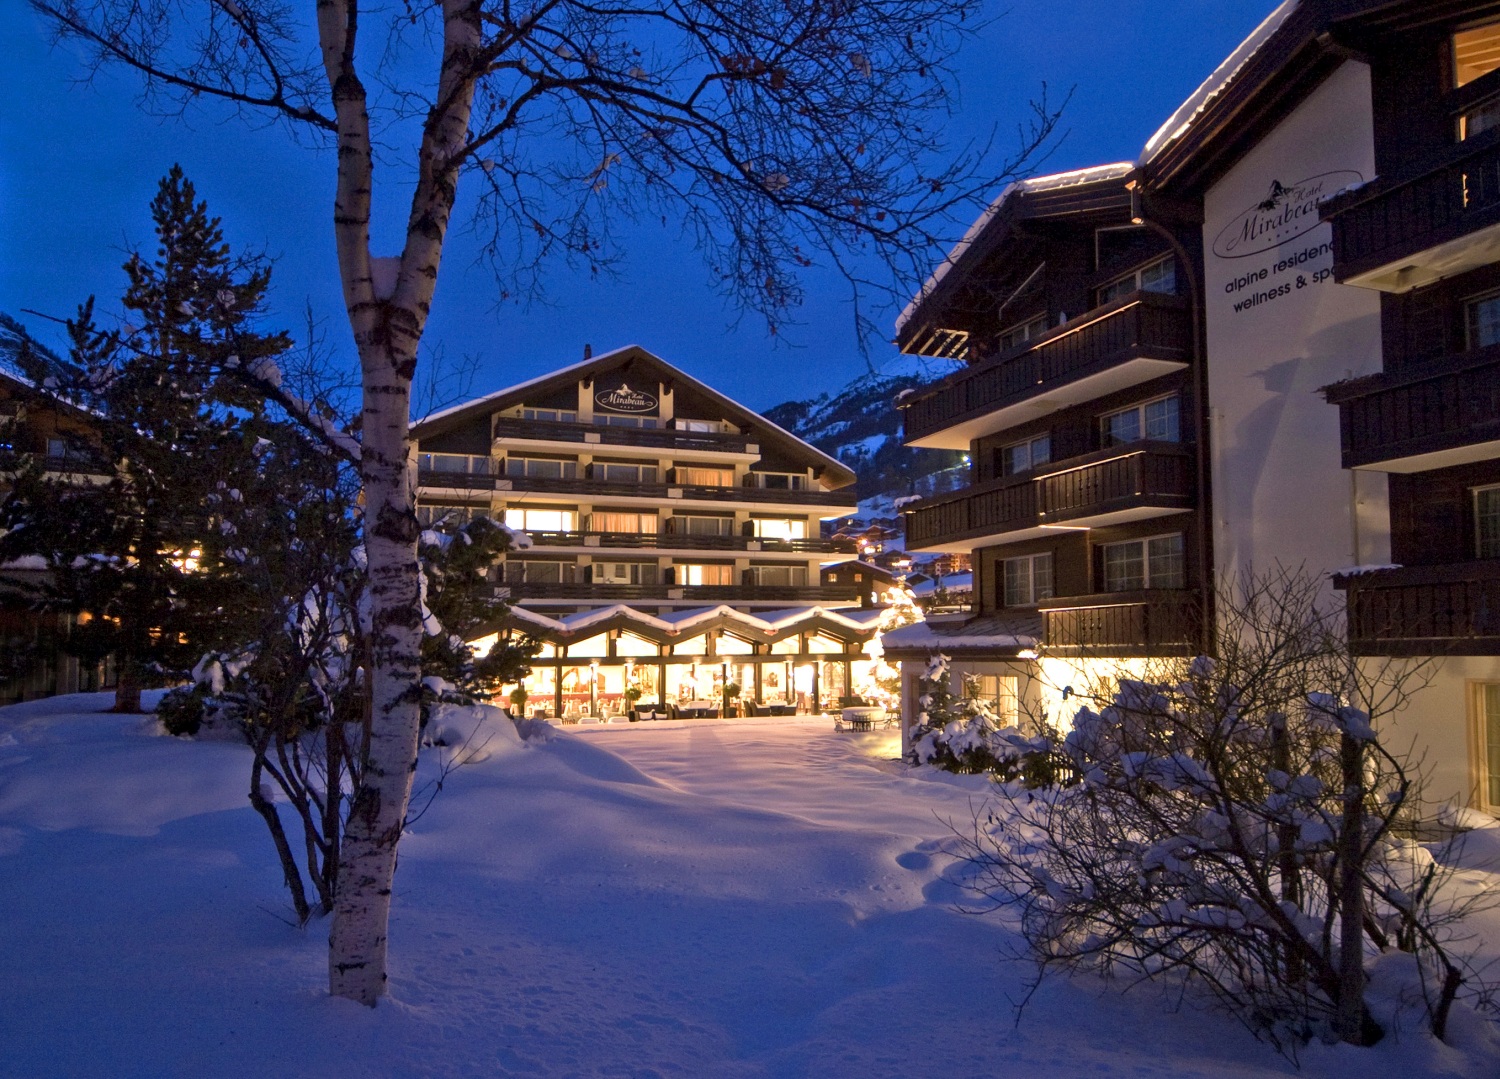 zermatt-ski-resort-switzerland